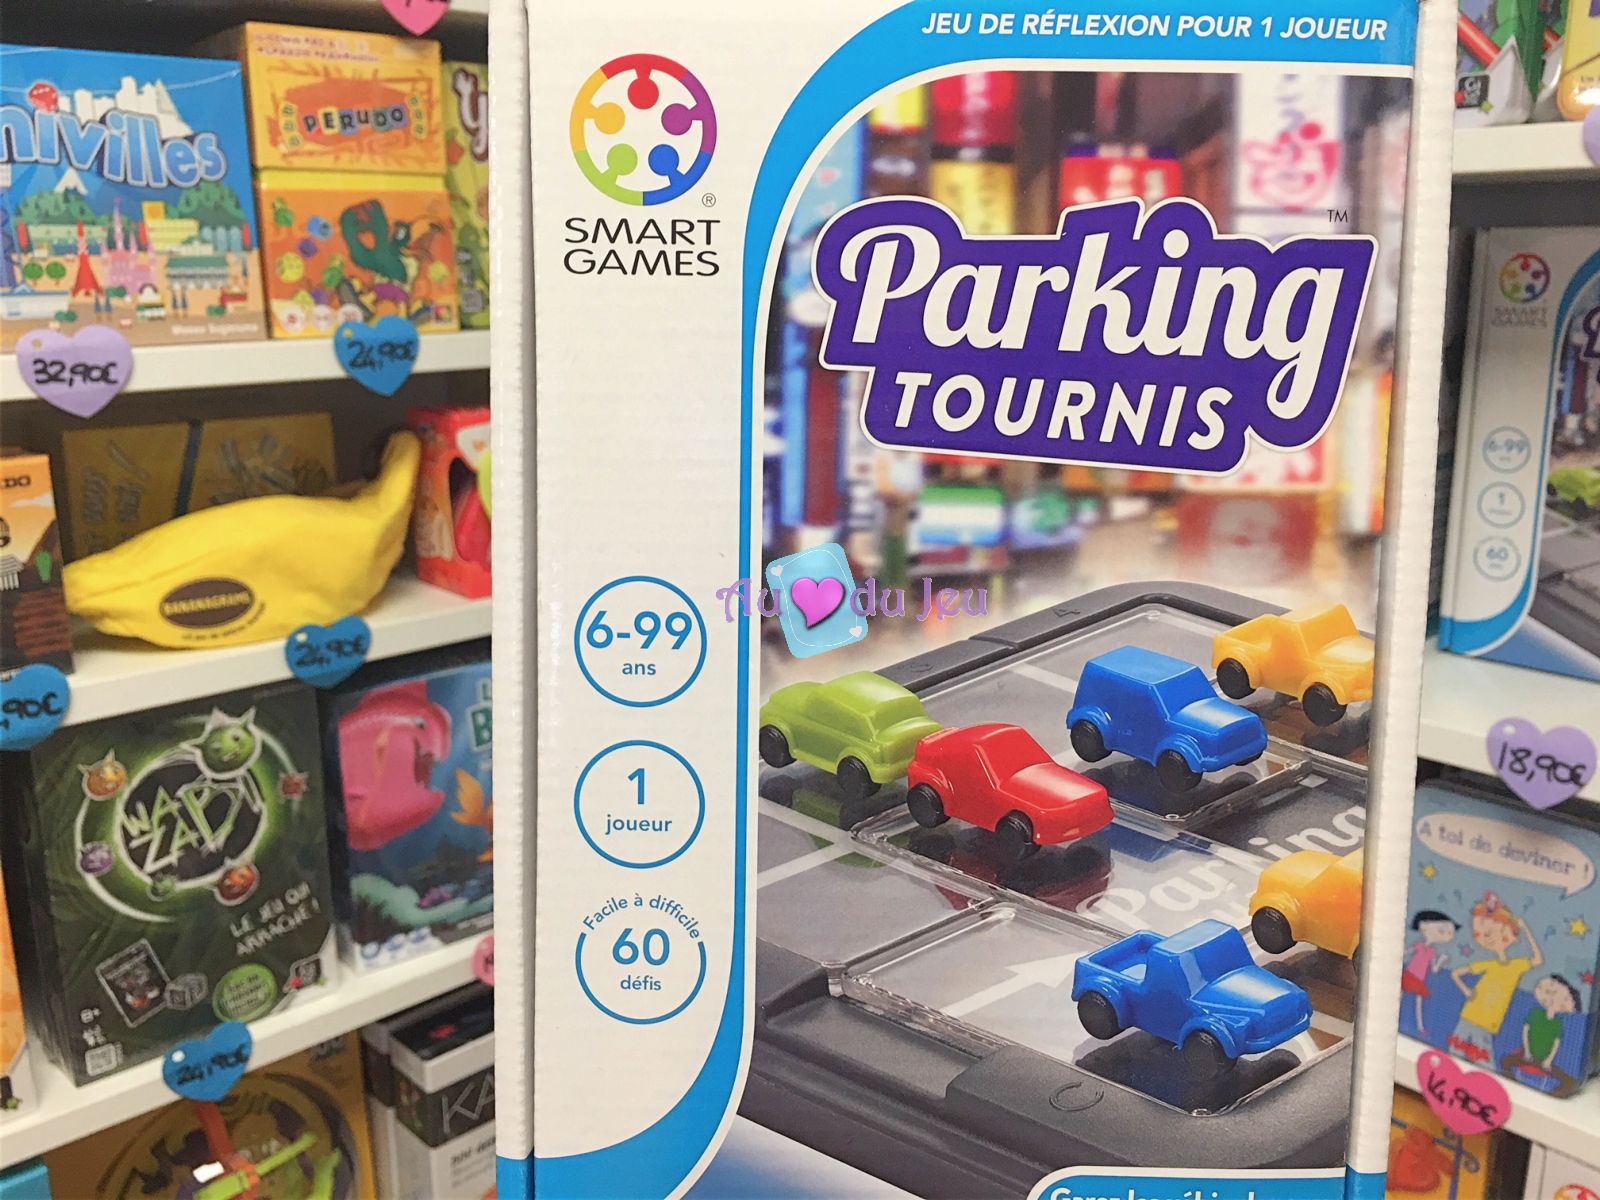 Parking Tournis Smart Games